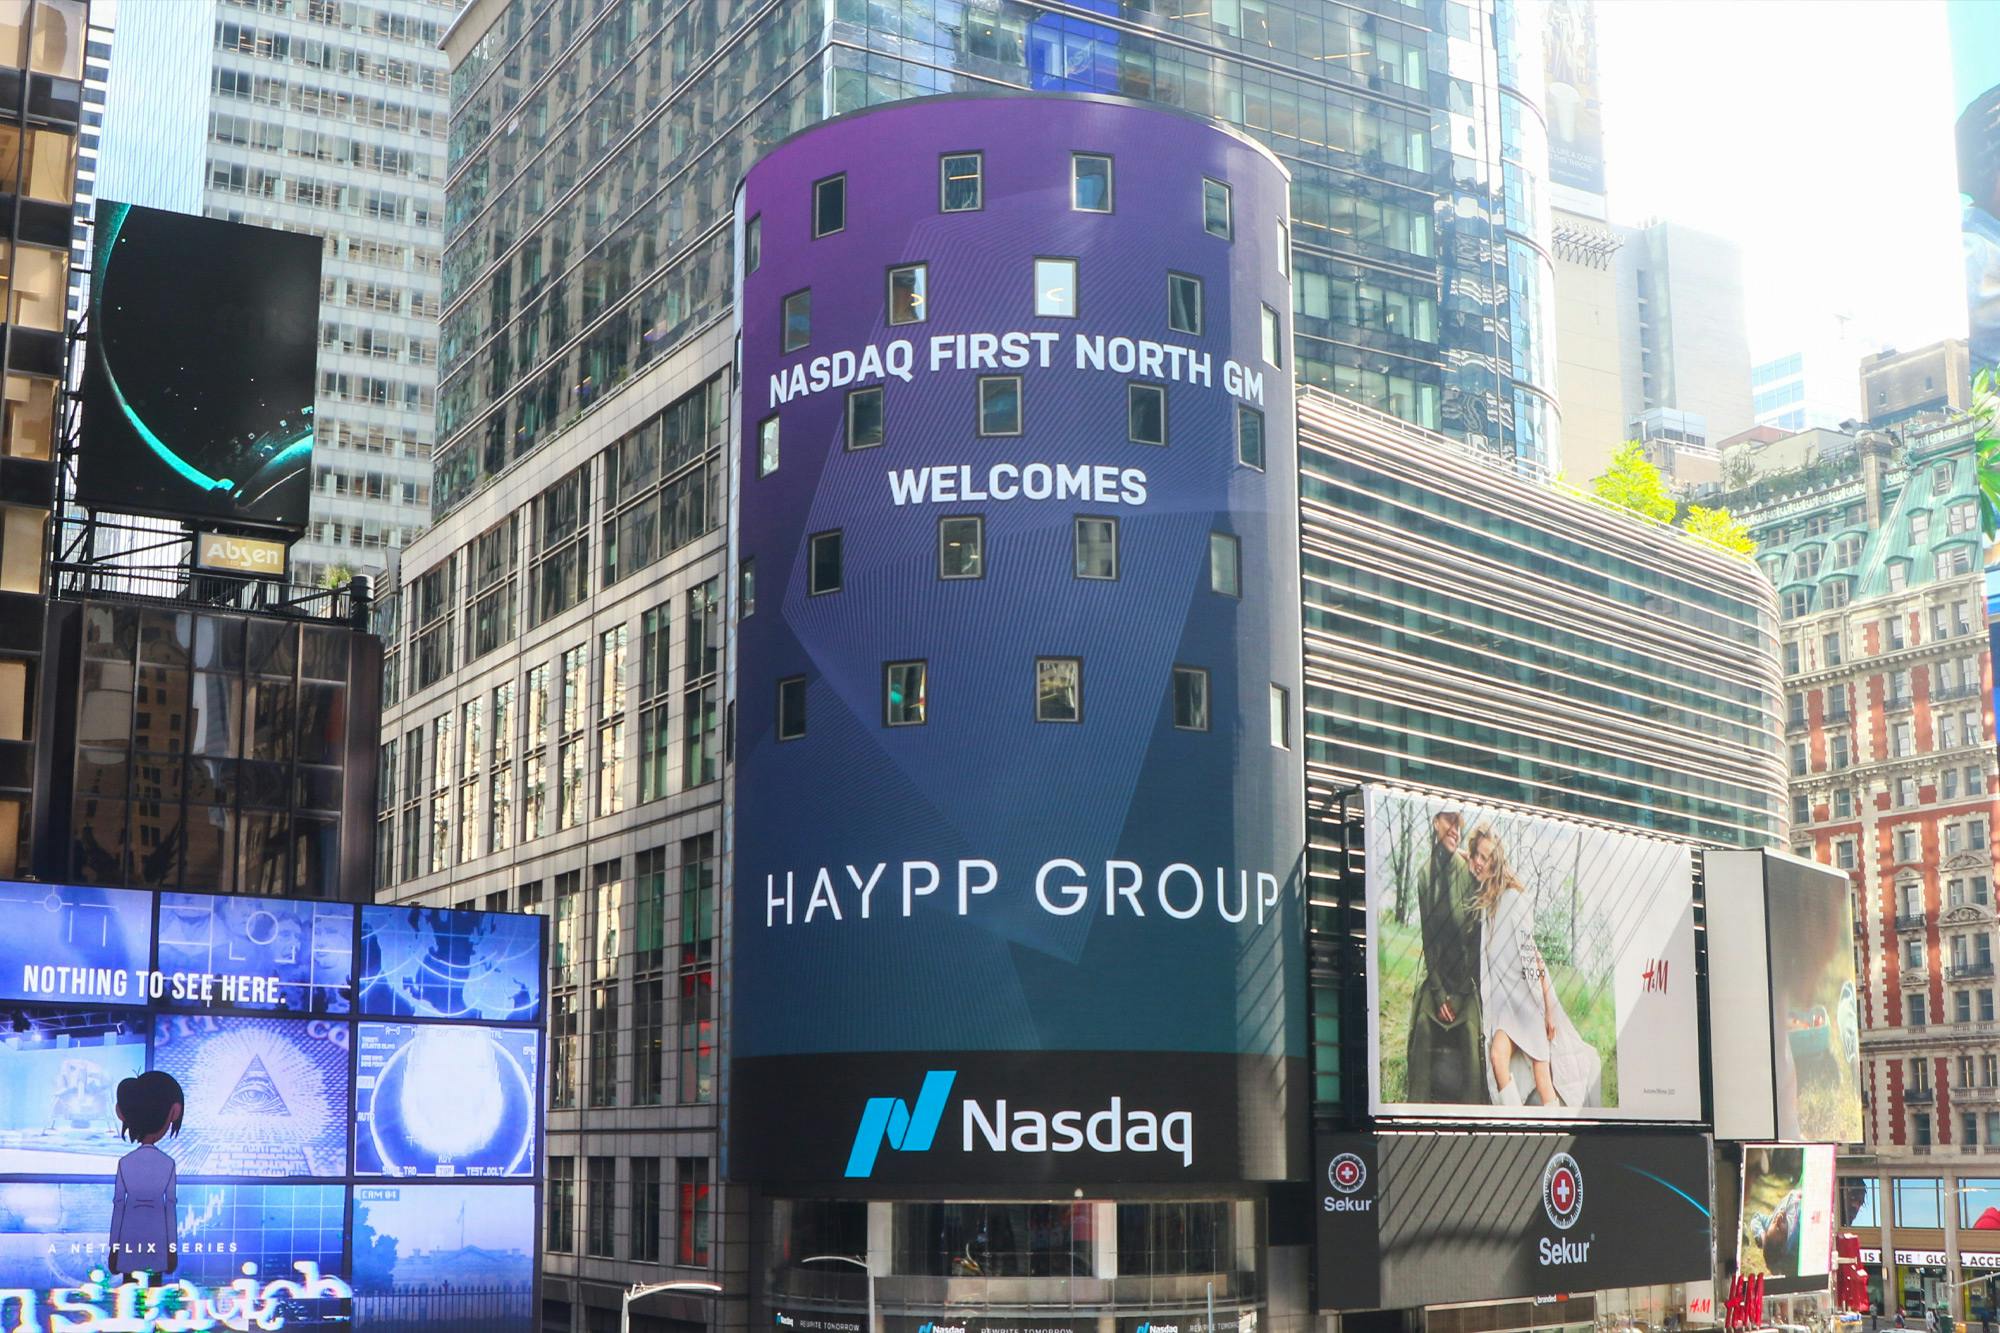 Haypp Group lansering Nasdaq